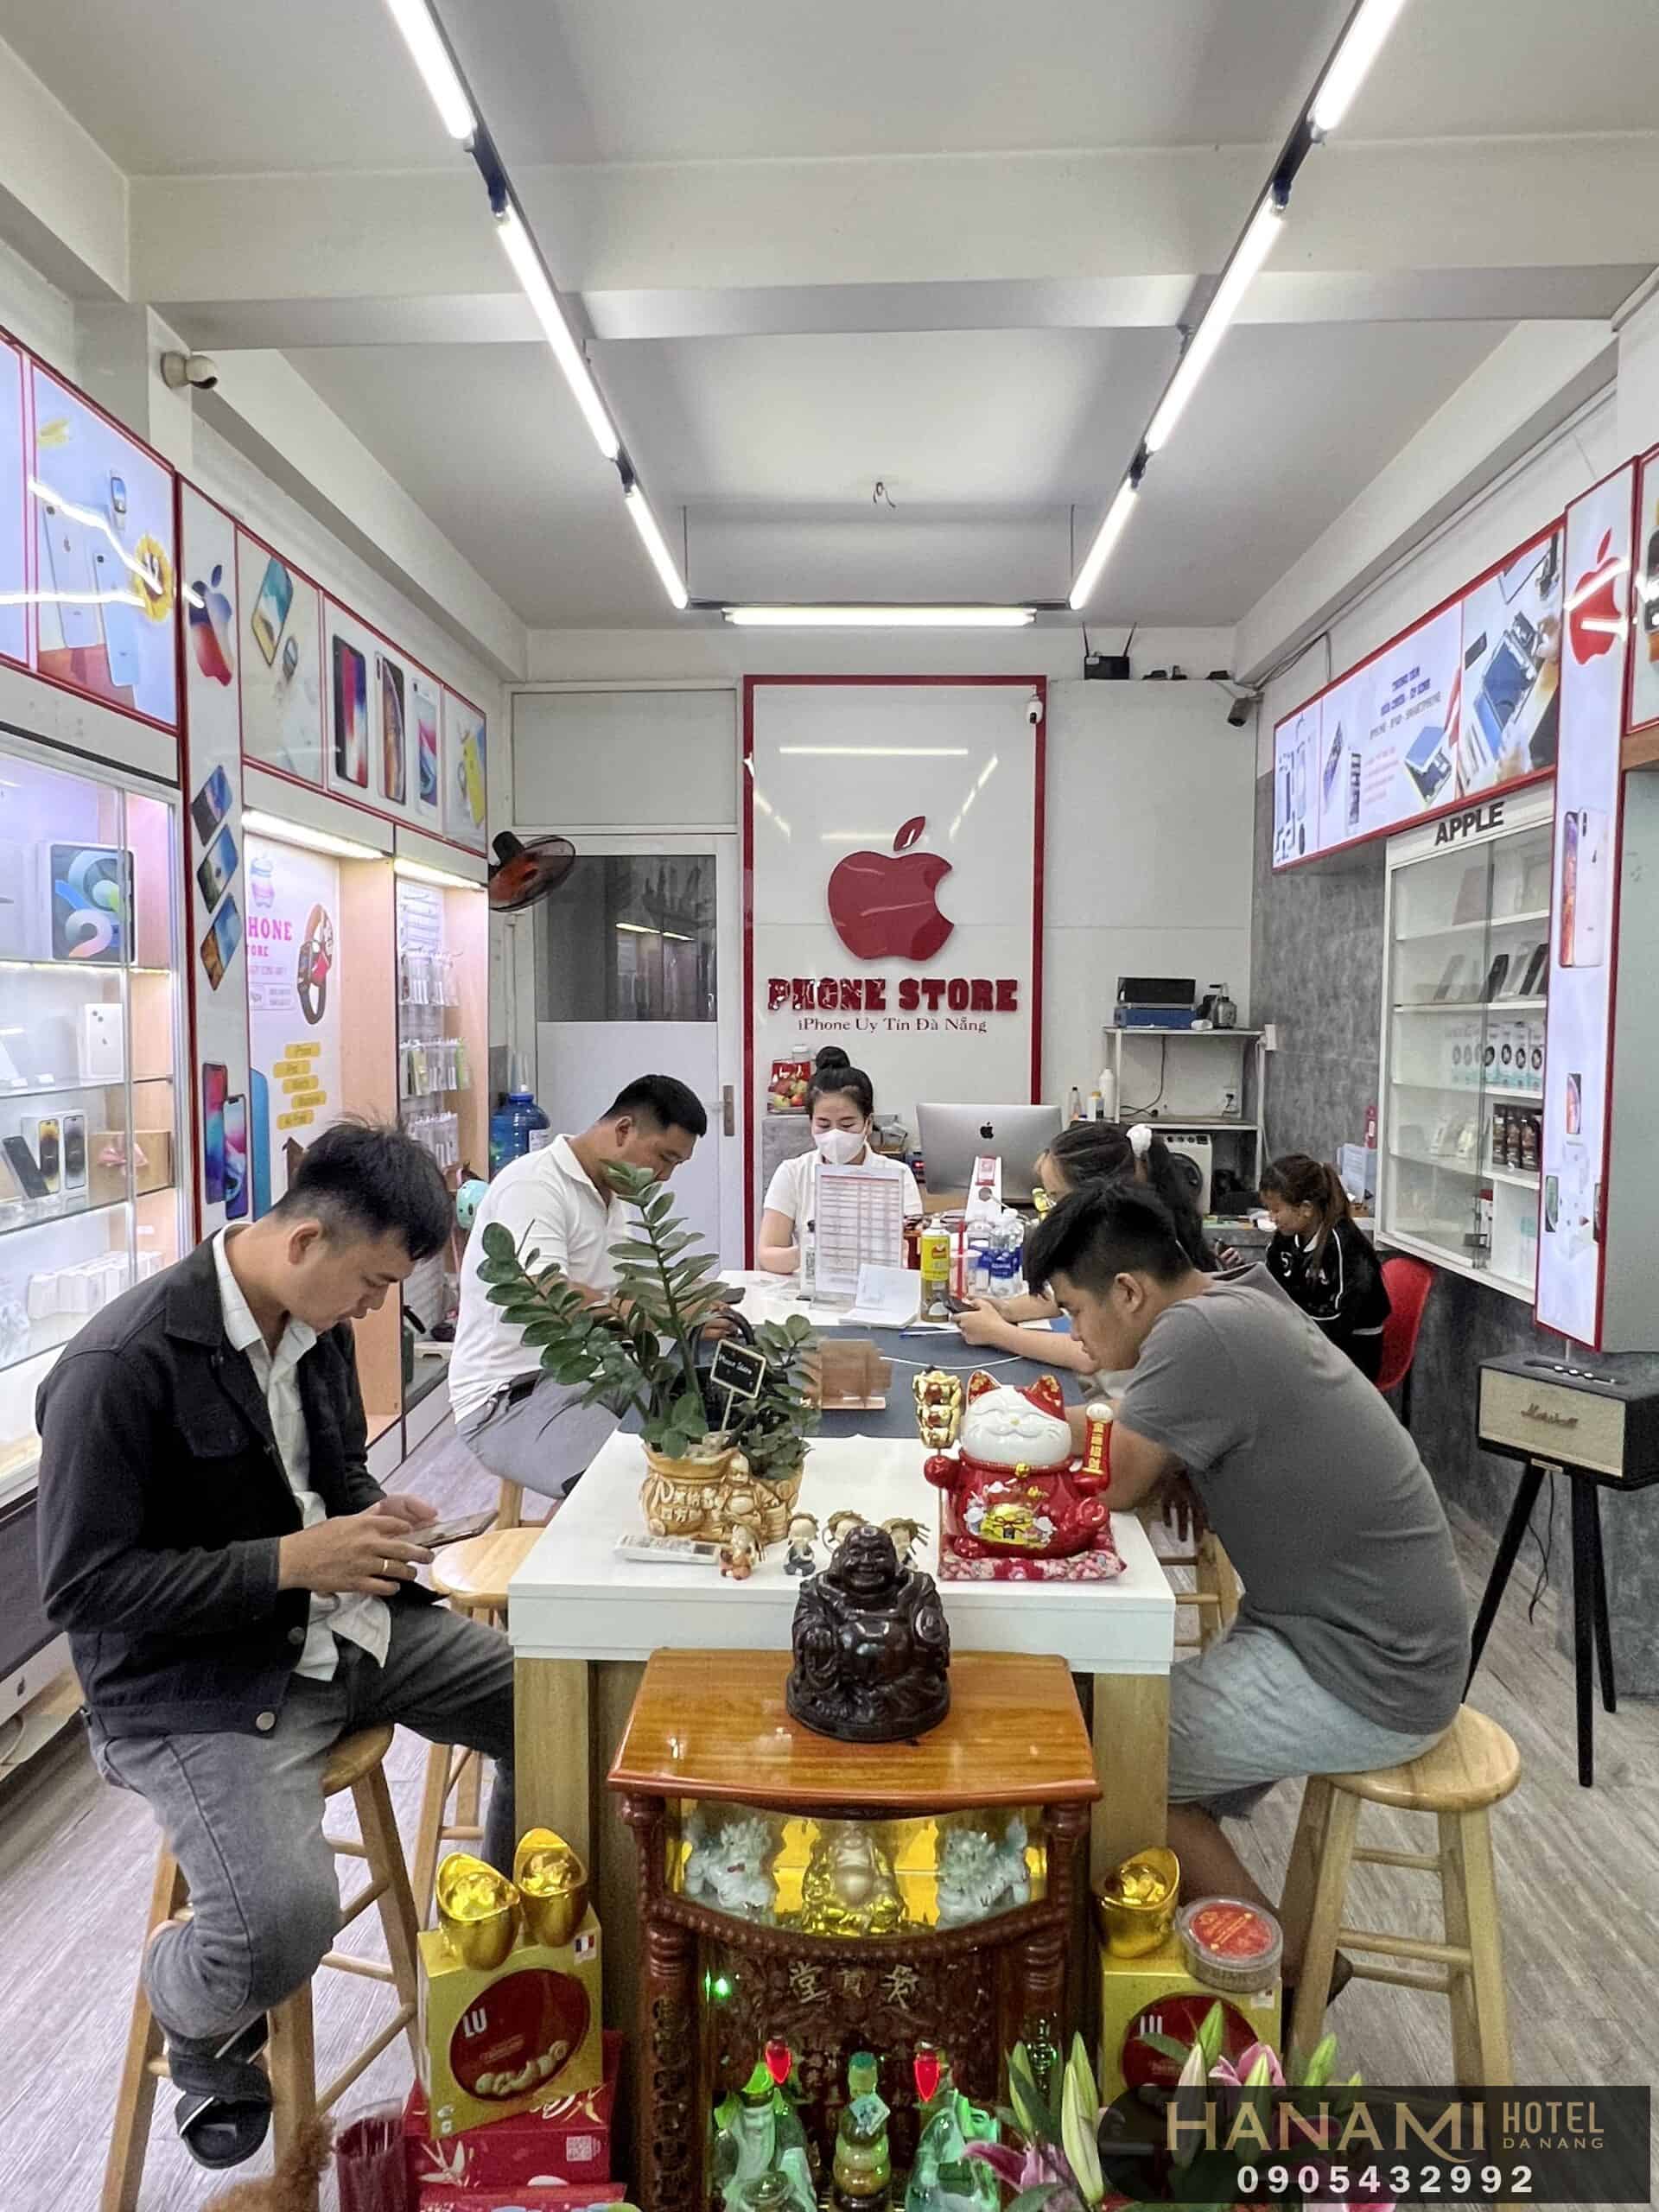 best iPhone screen replacement addresses in Da Nang